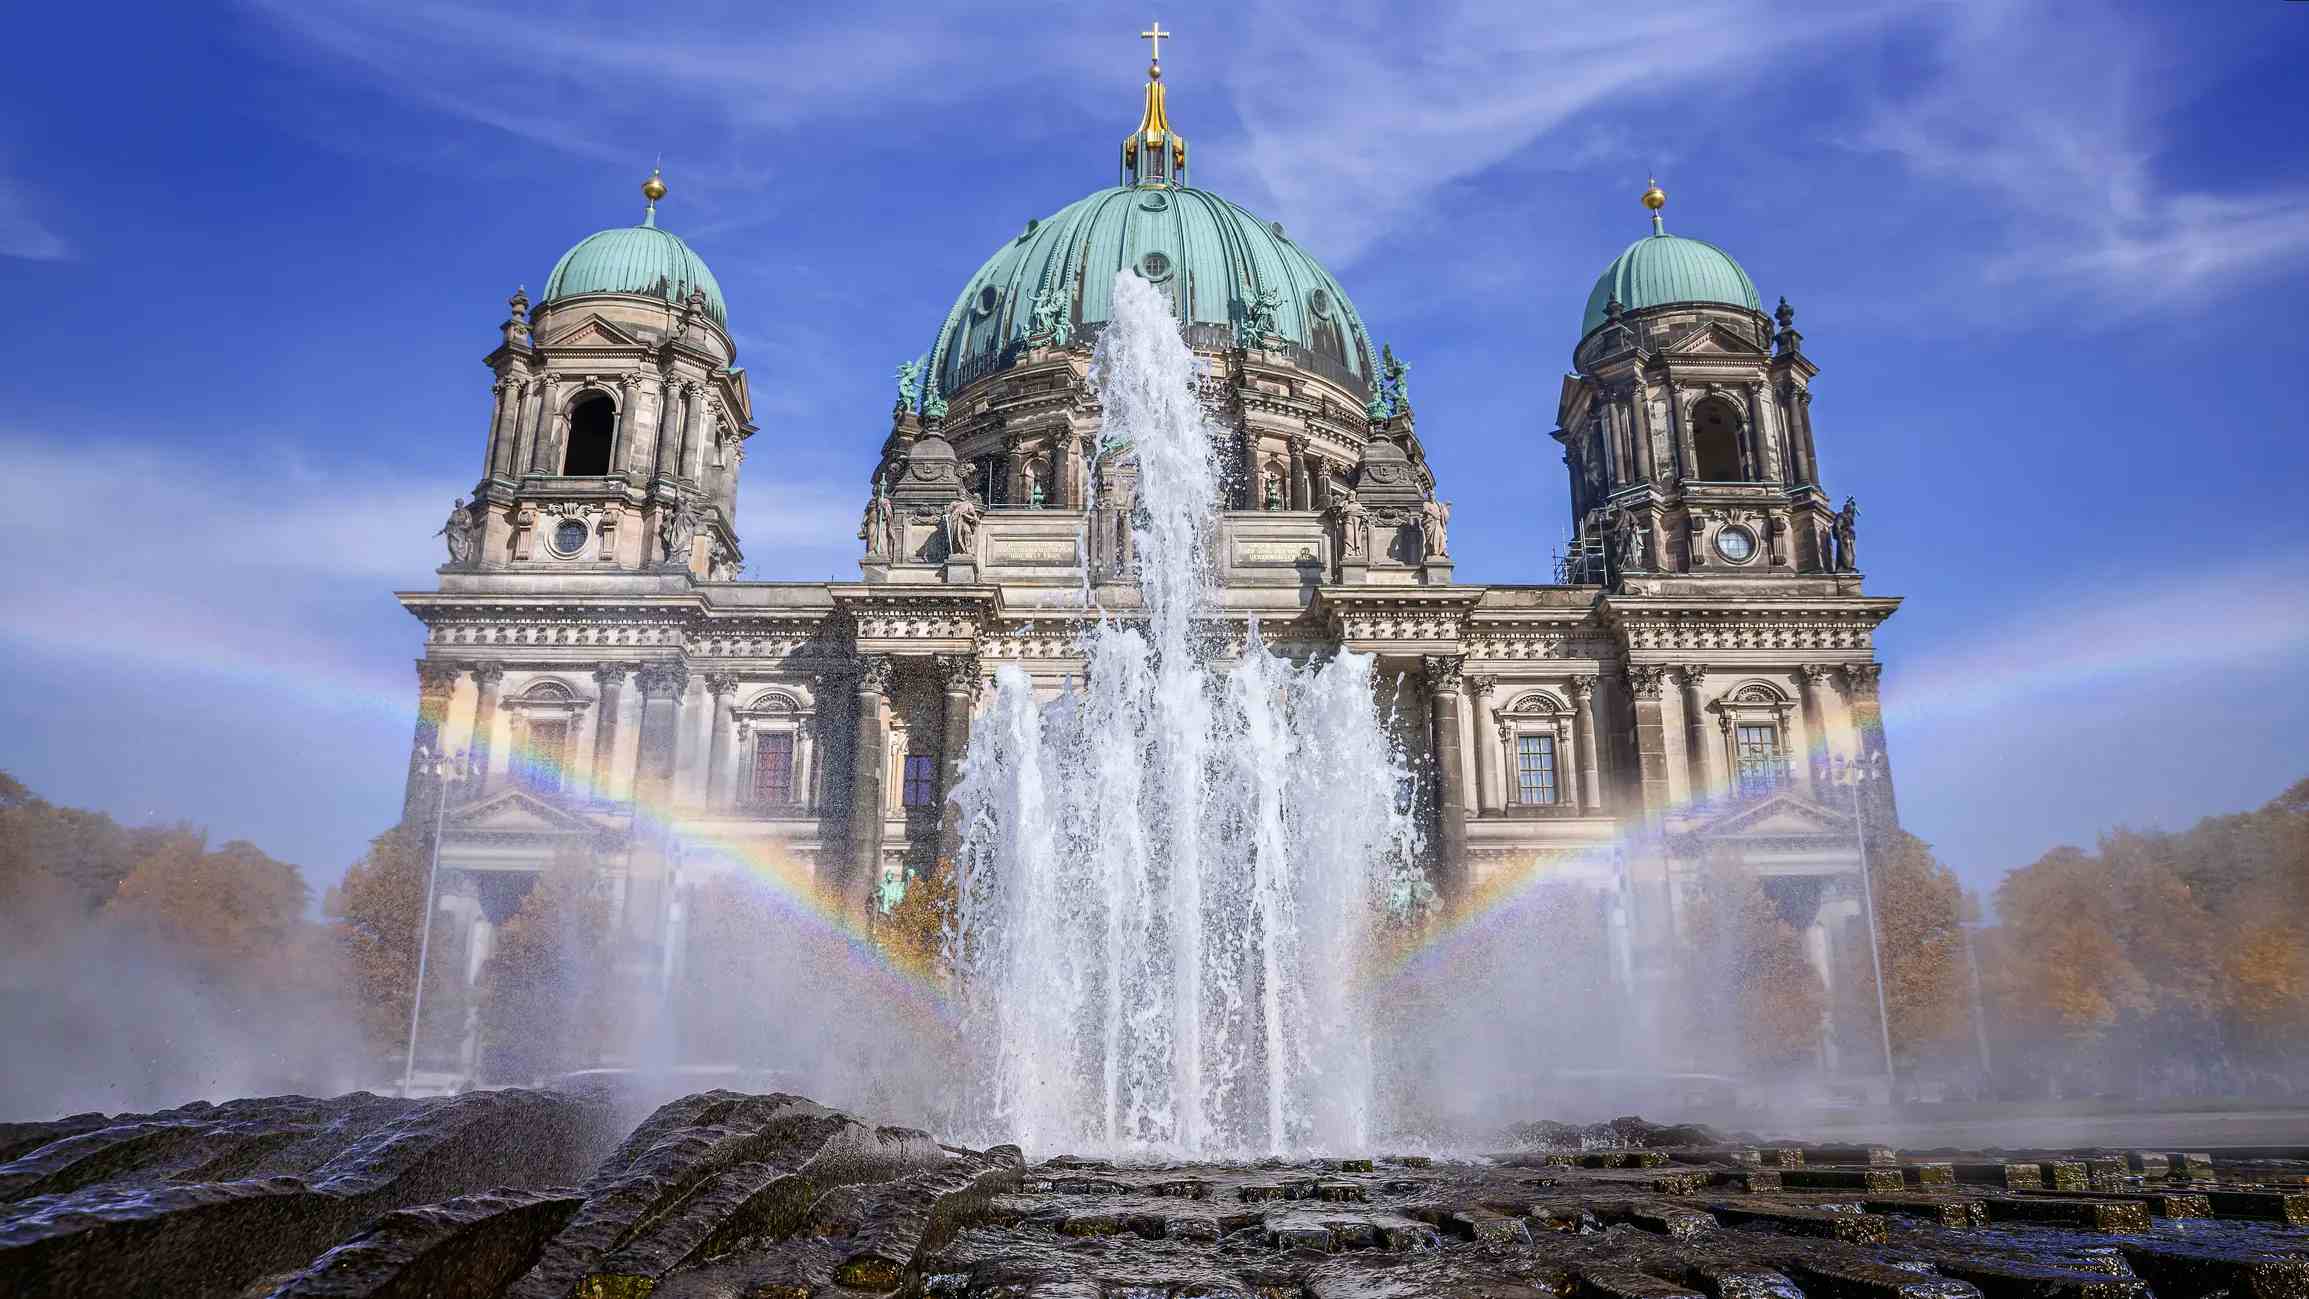 Catedral de Berlín (Berliner Dom) image